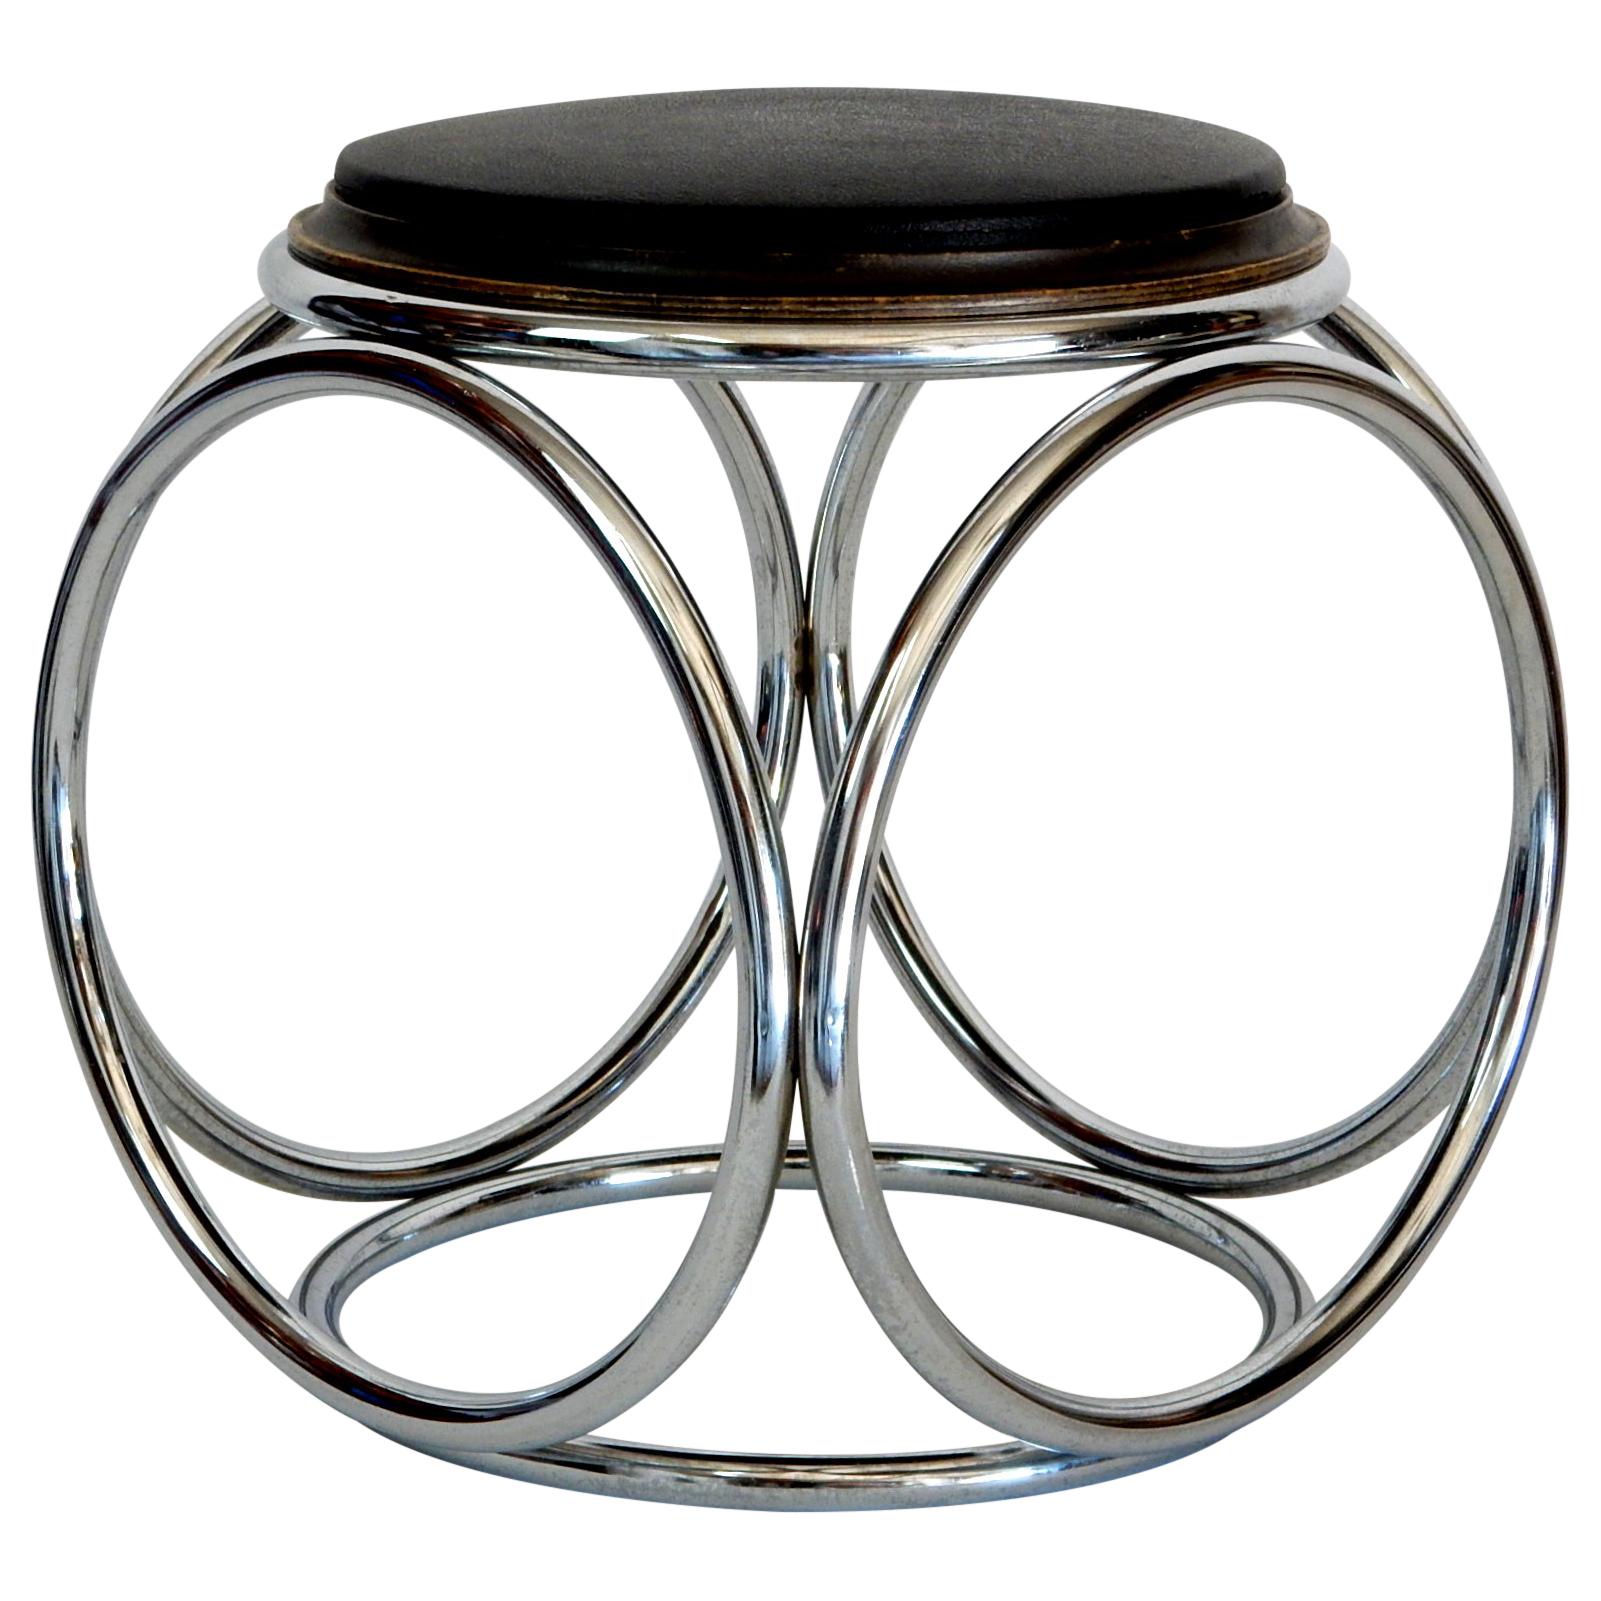 French Art Deco Jean-Pierre Laporte Design Tubular Circle Stool or Table